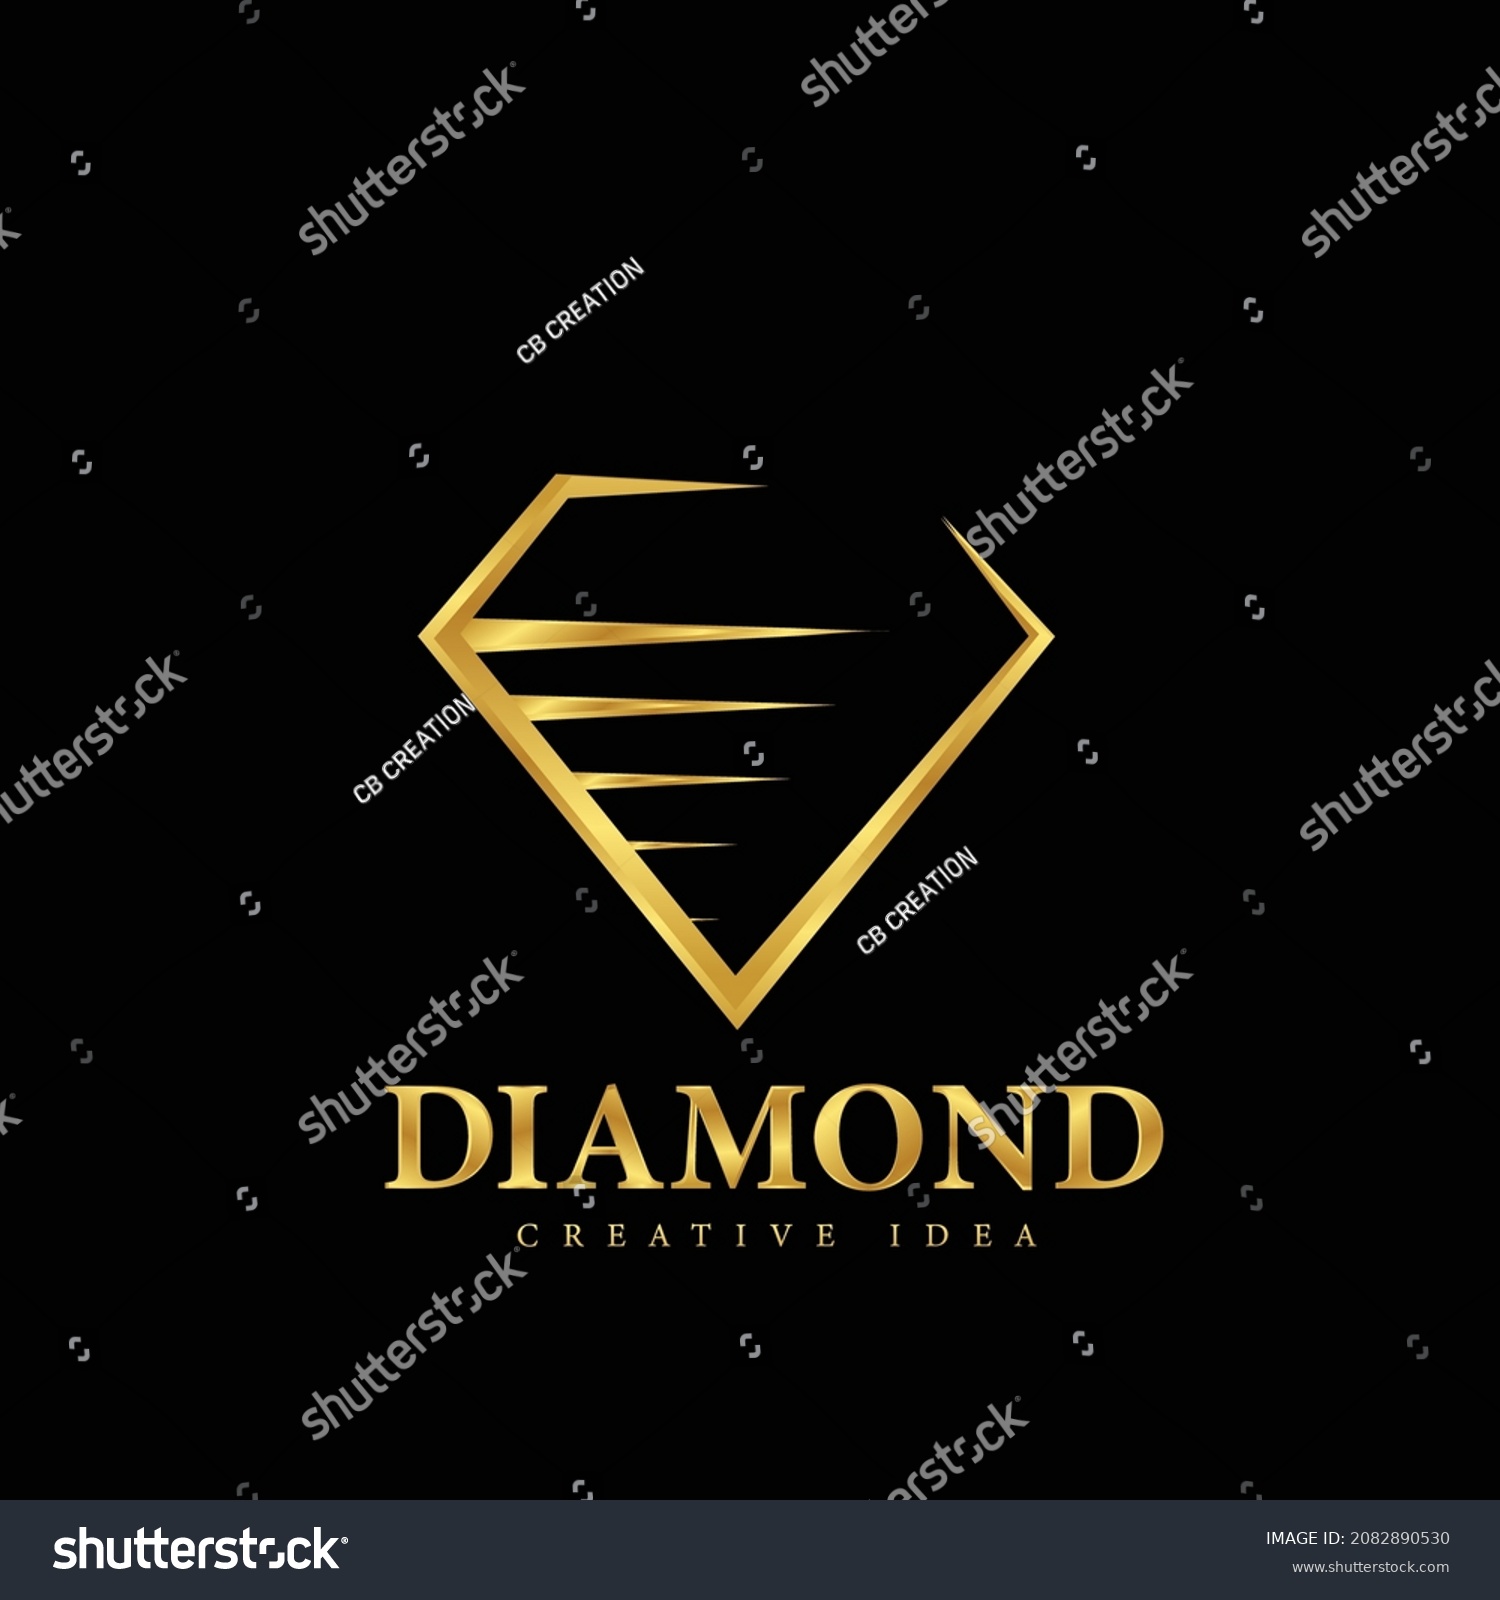 Creative Diamond Logo Icon Design Template Stock Vector Royalty Free Shutterstock